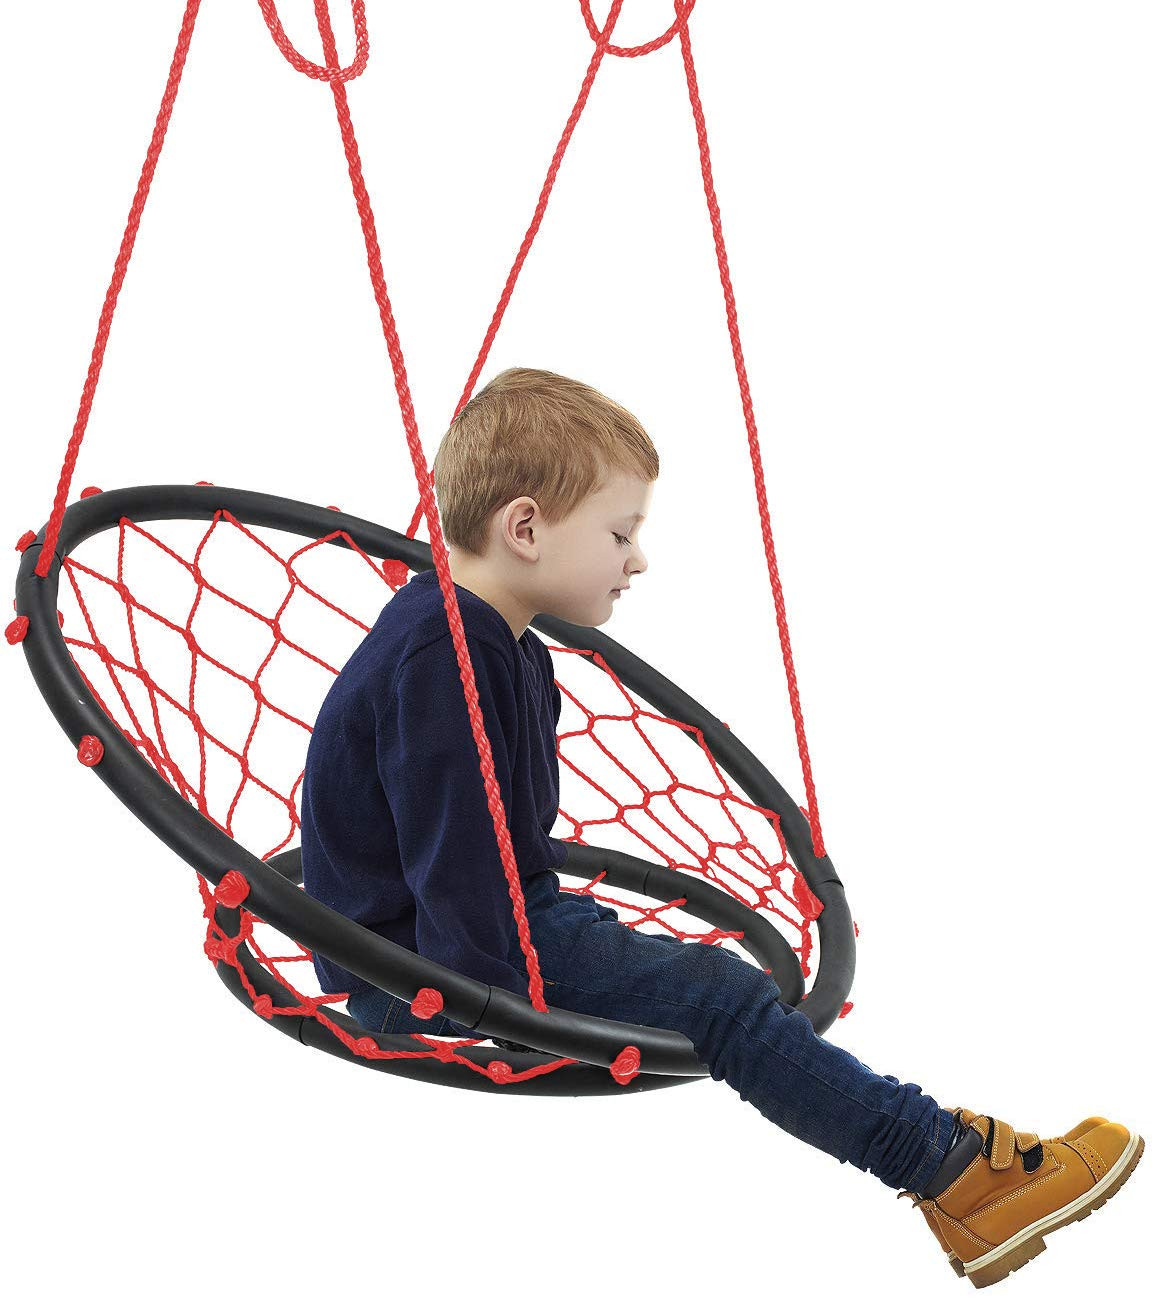 Kids Round Swing
 Sorbus Spinner Swing – Kids Indoor Outdoor Round Web Swing